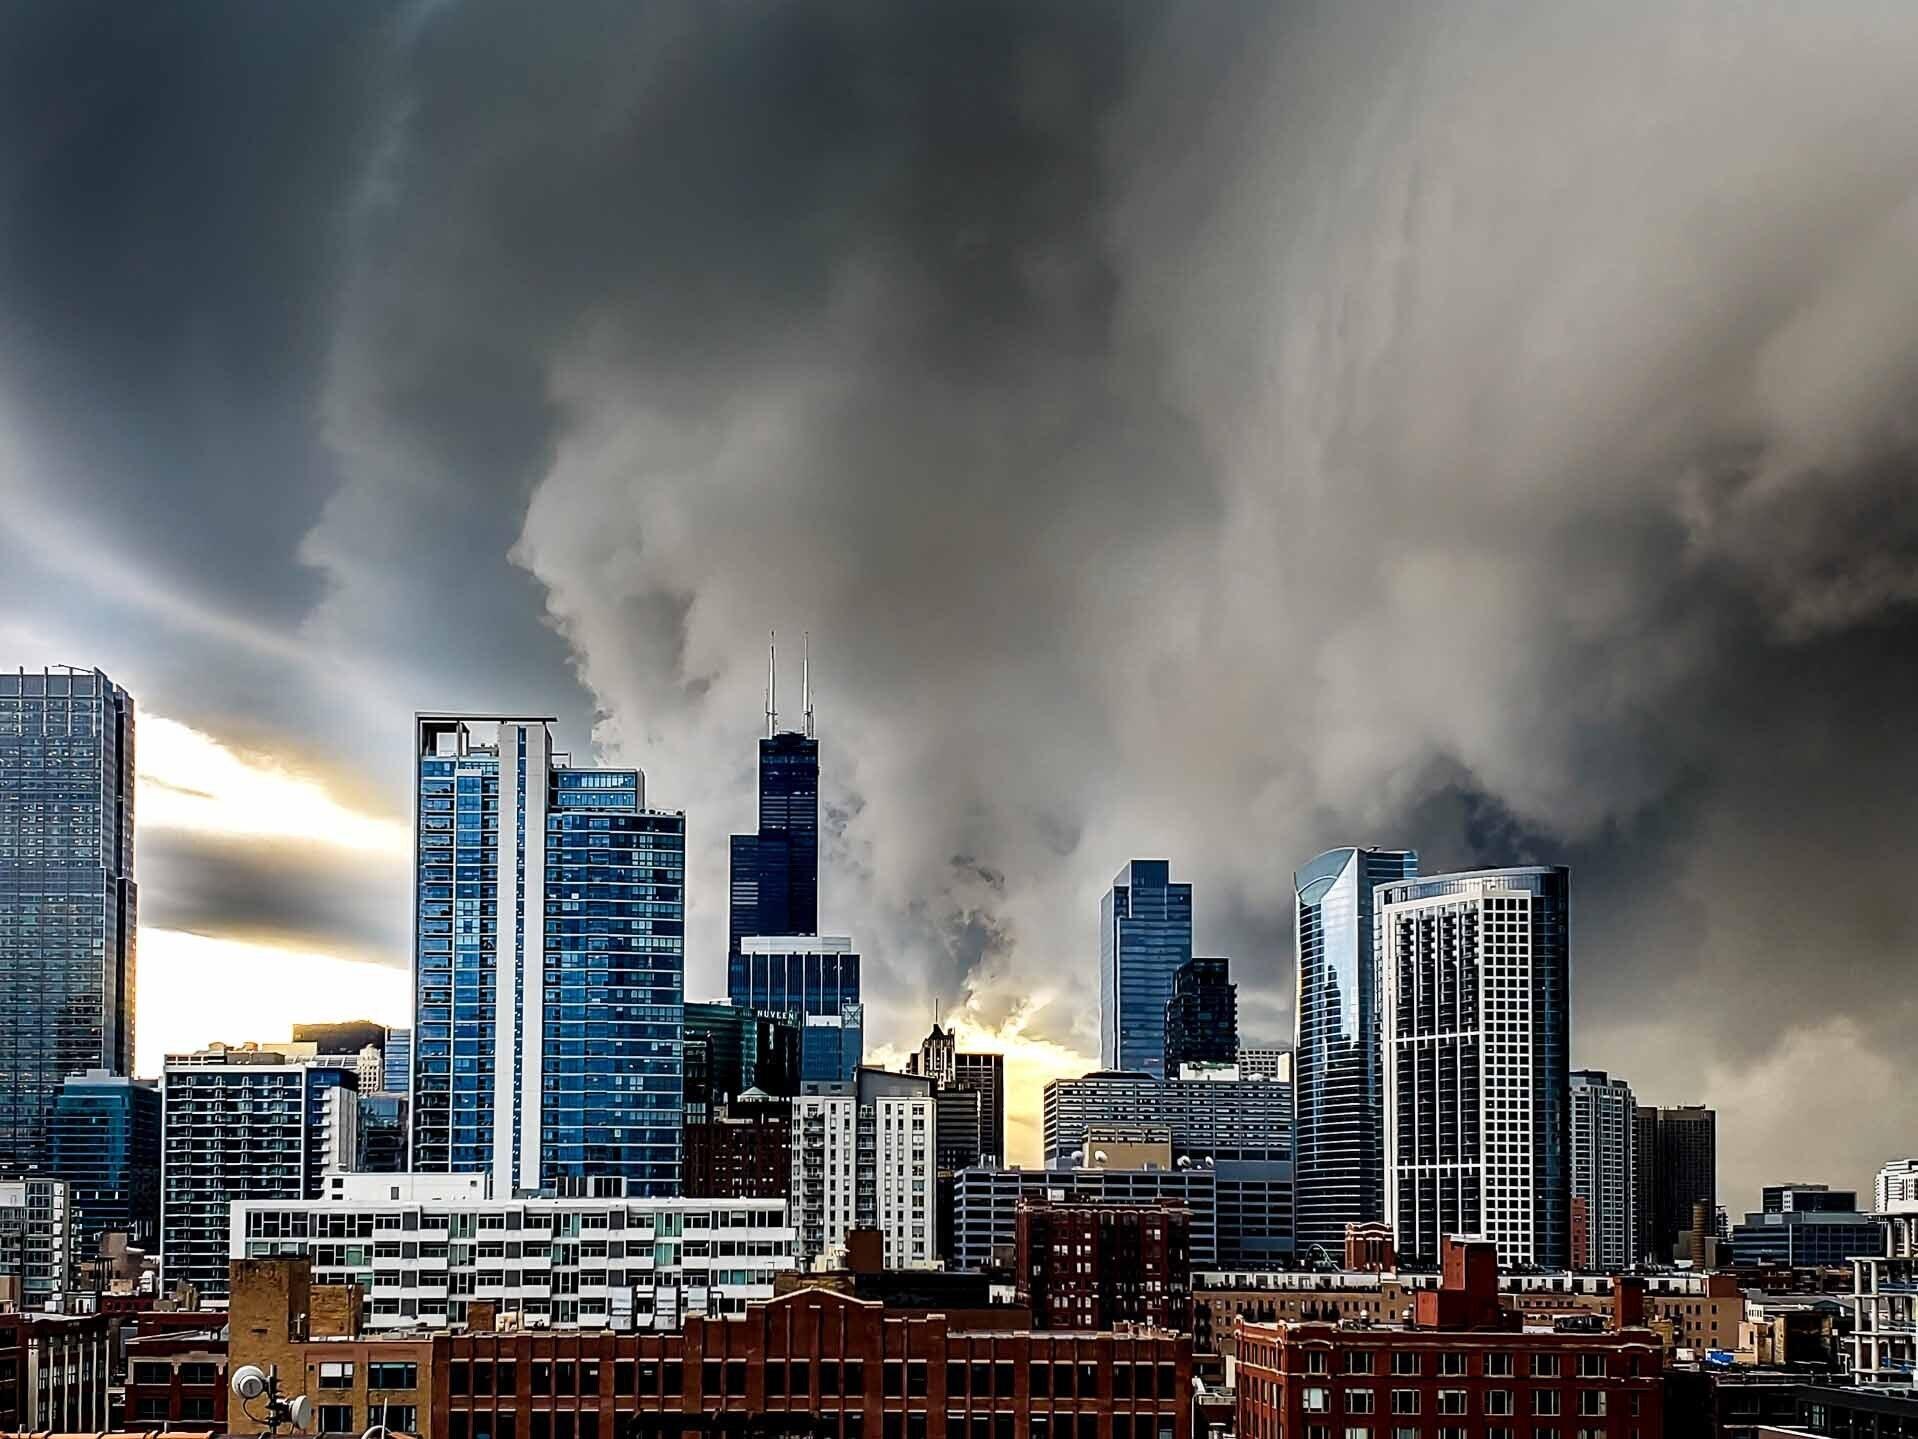 Chicago Weather Tornado Warning